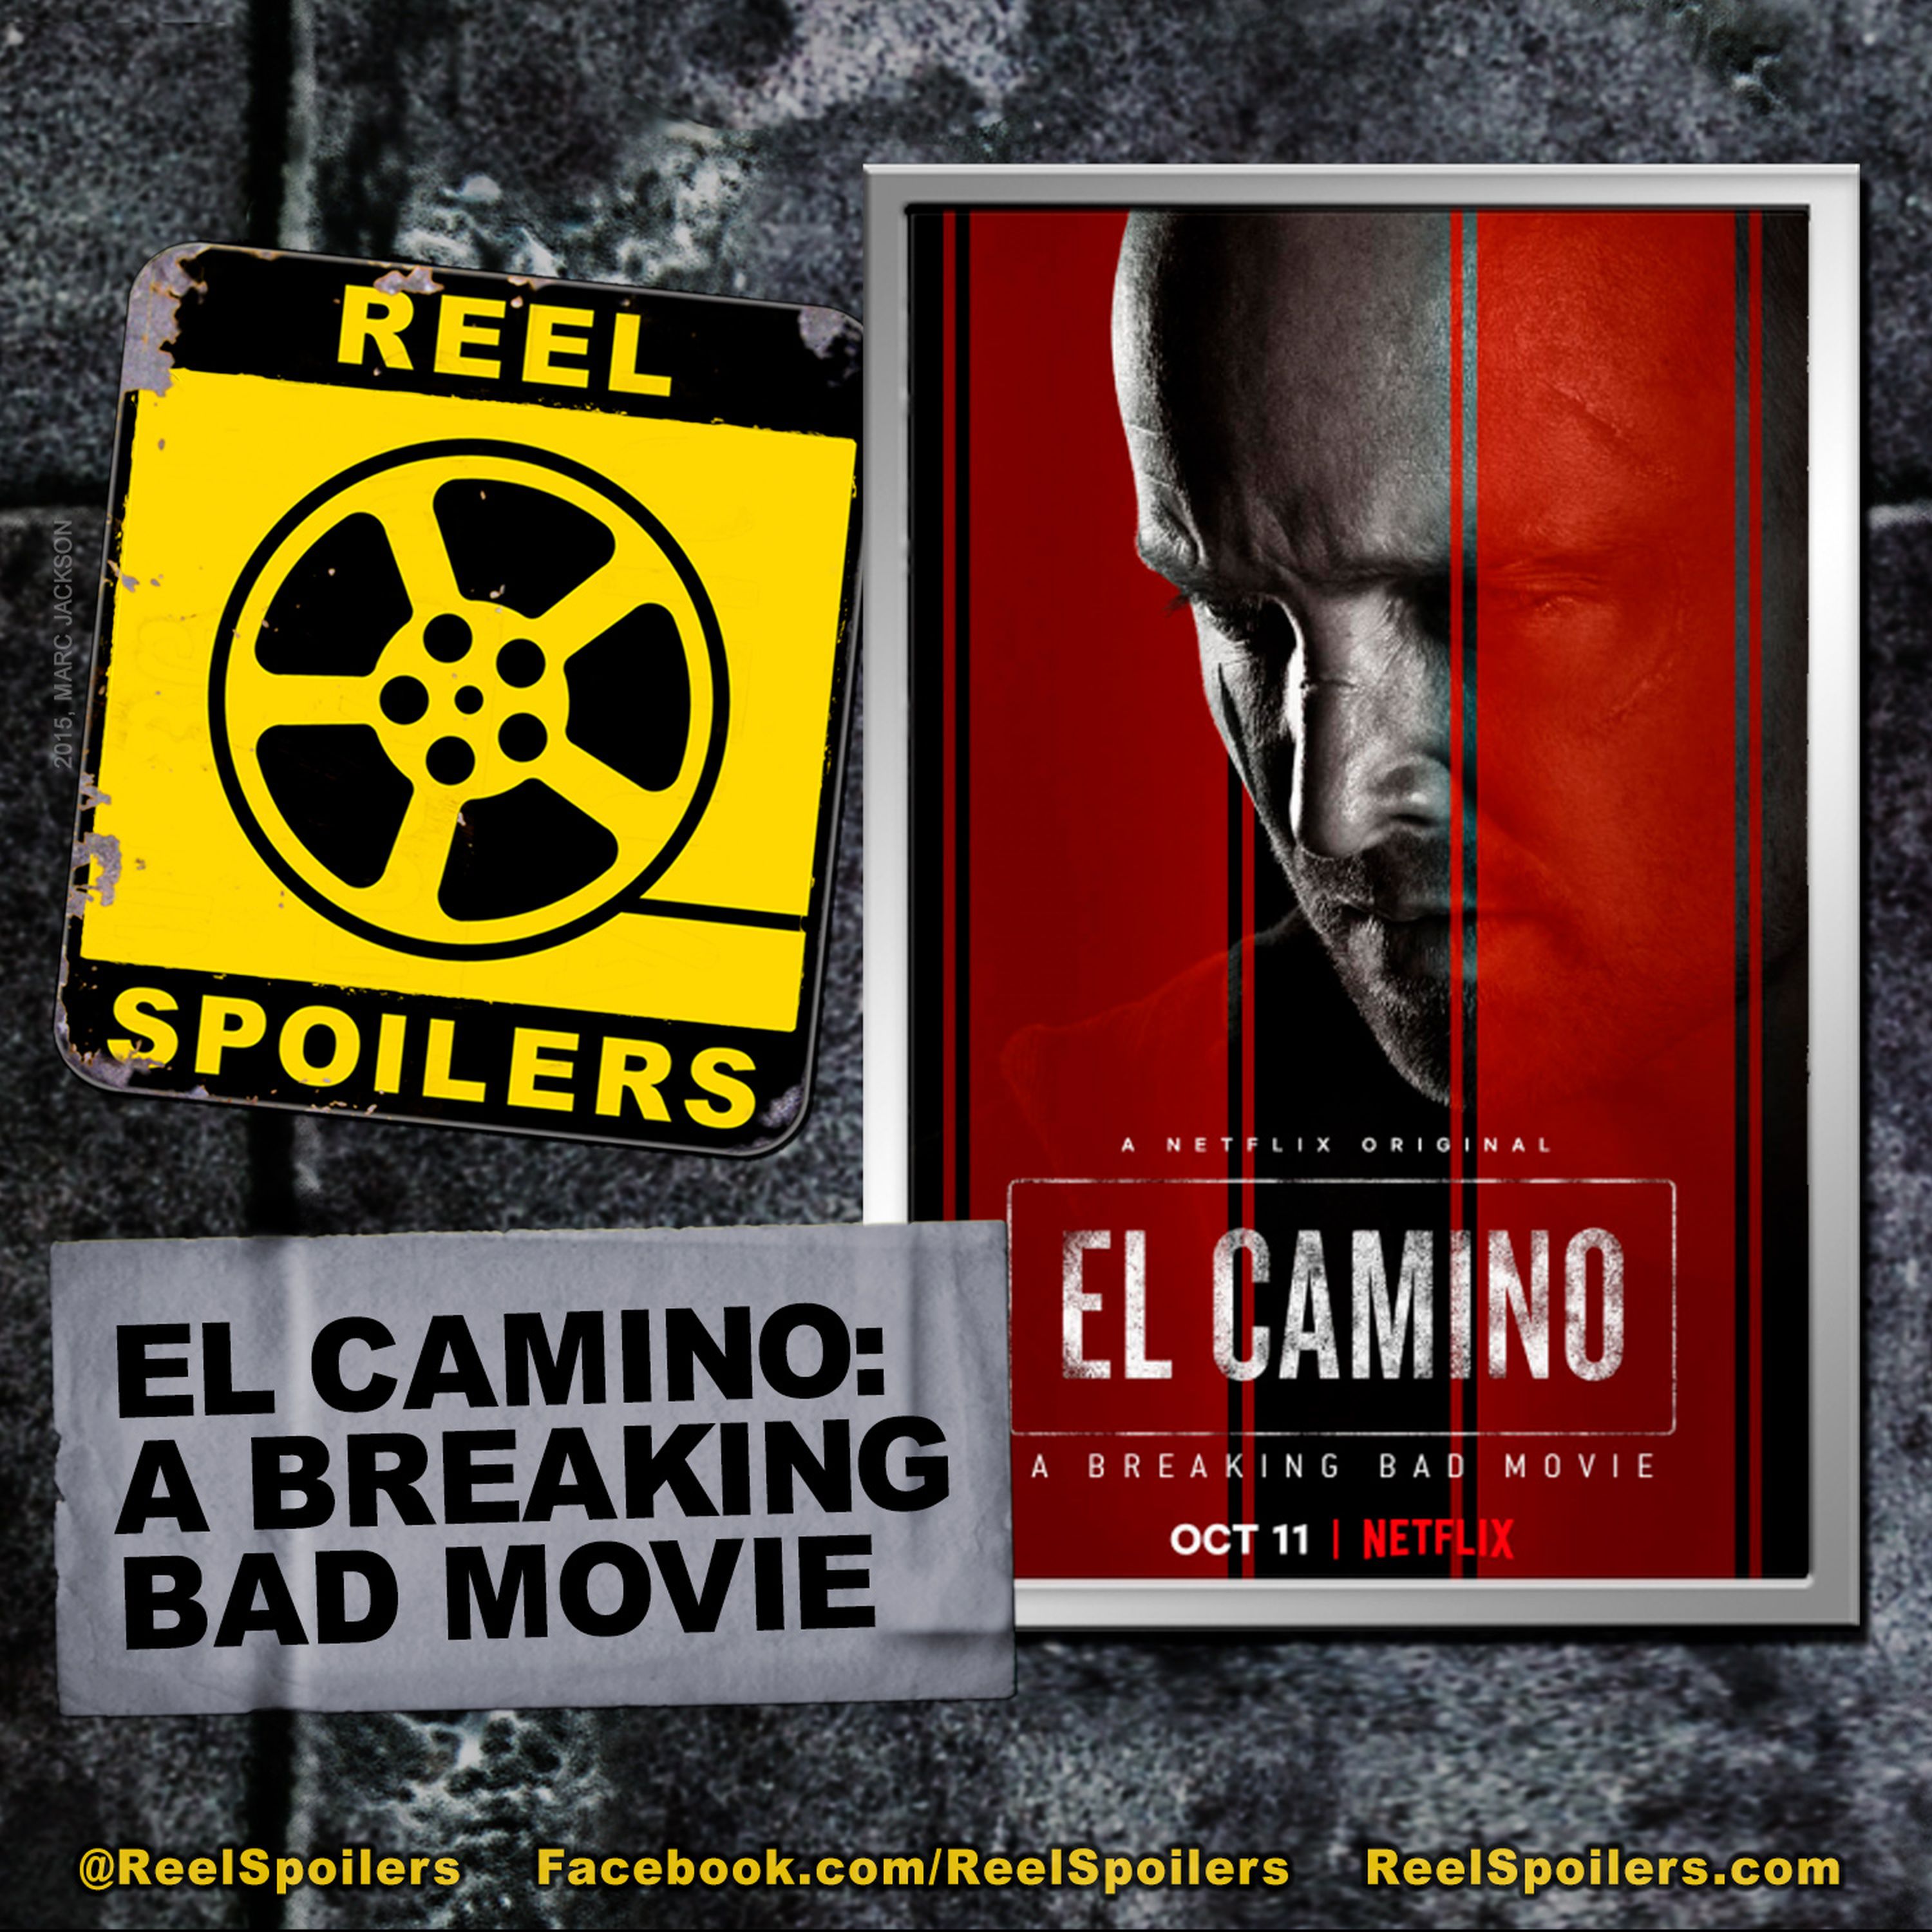 EL CAMINO: A BREAKING BAD MOVIE on Netflix Image